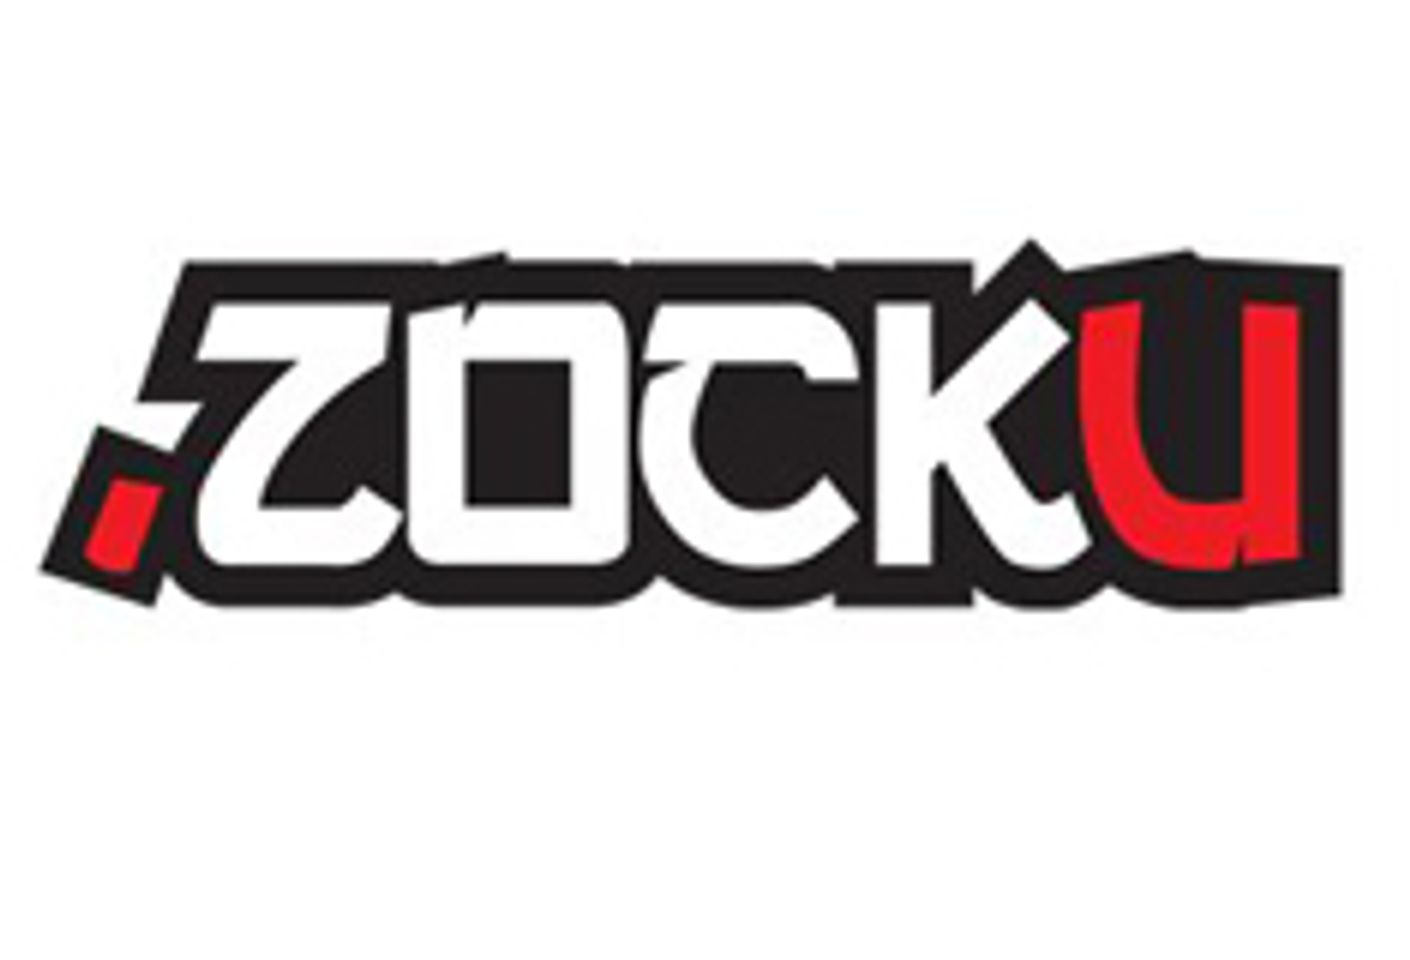 Zocku Offers Adult Social Network Service Platform